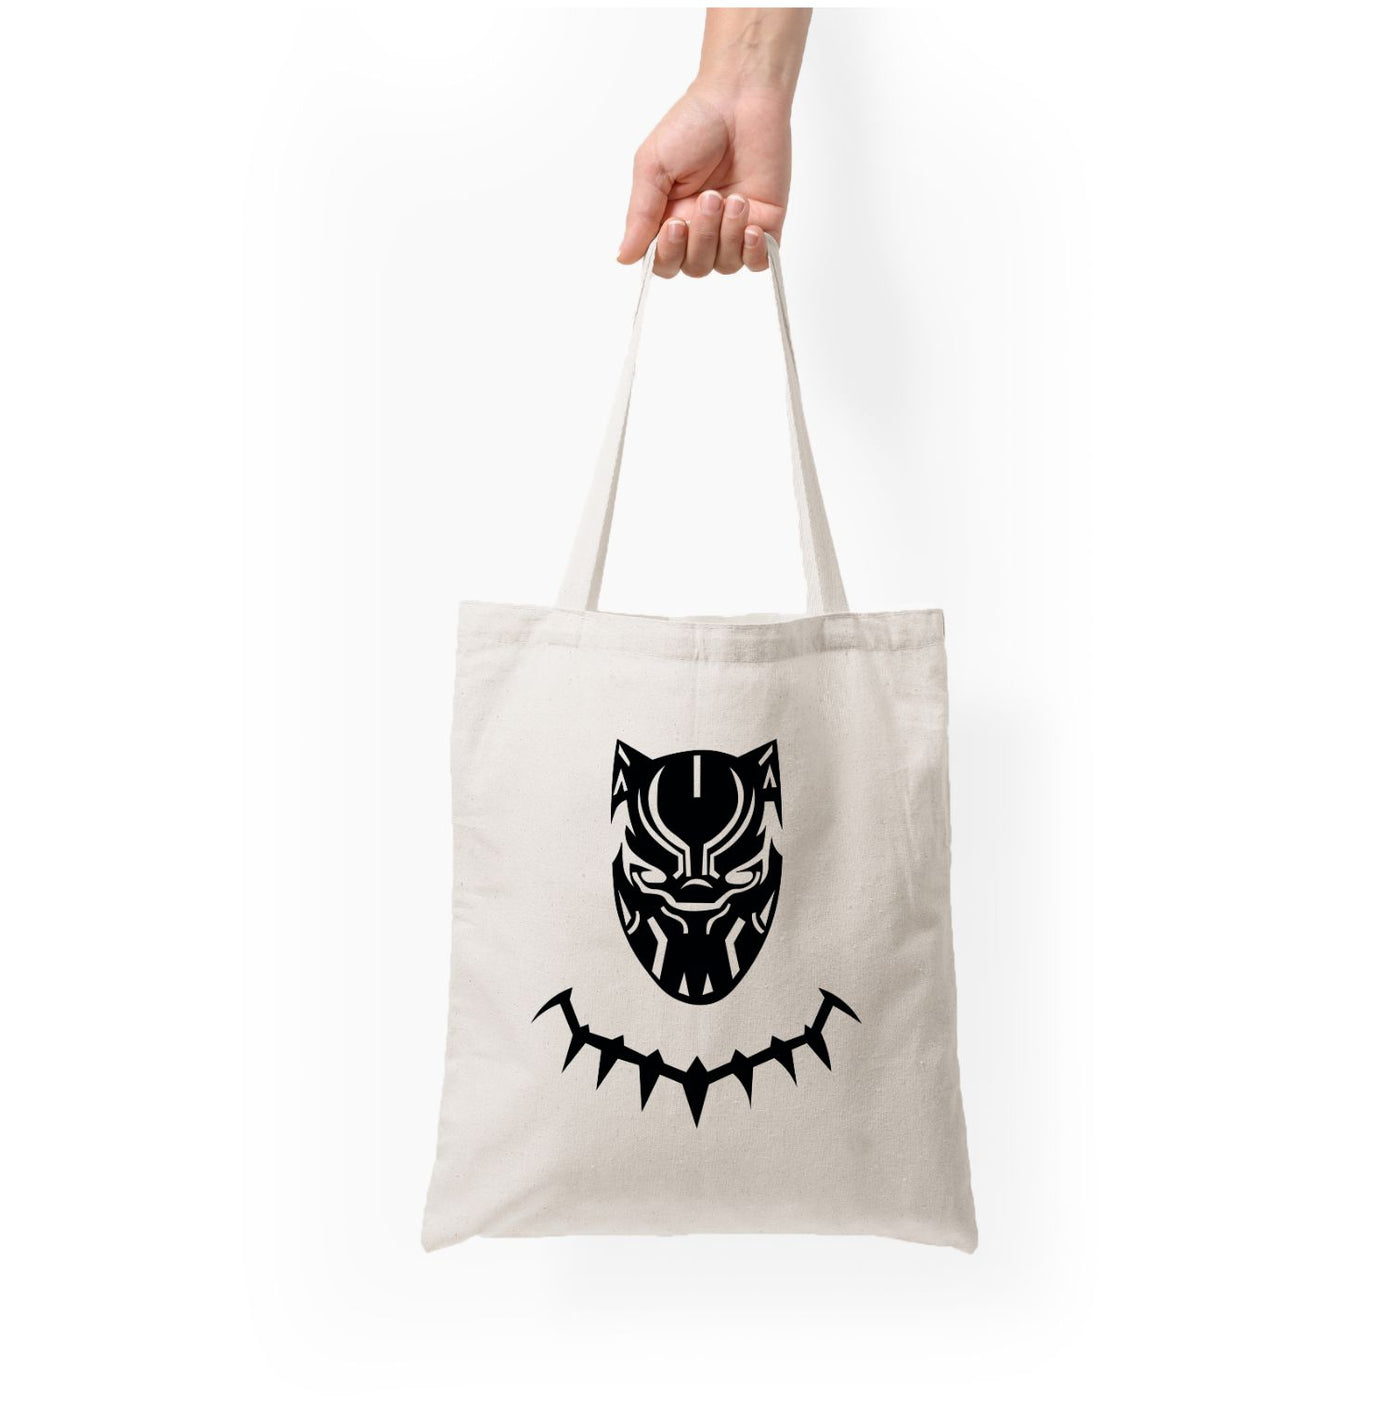 Black Mask - Black Panther Tote Bag